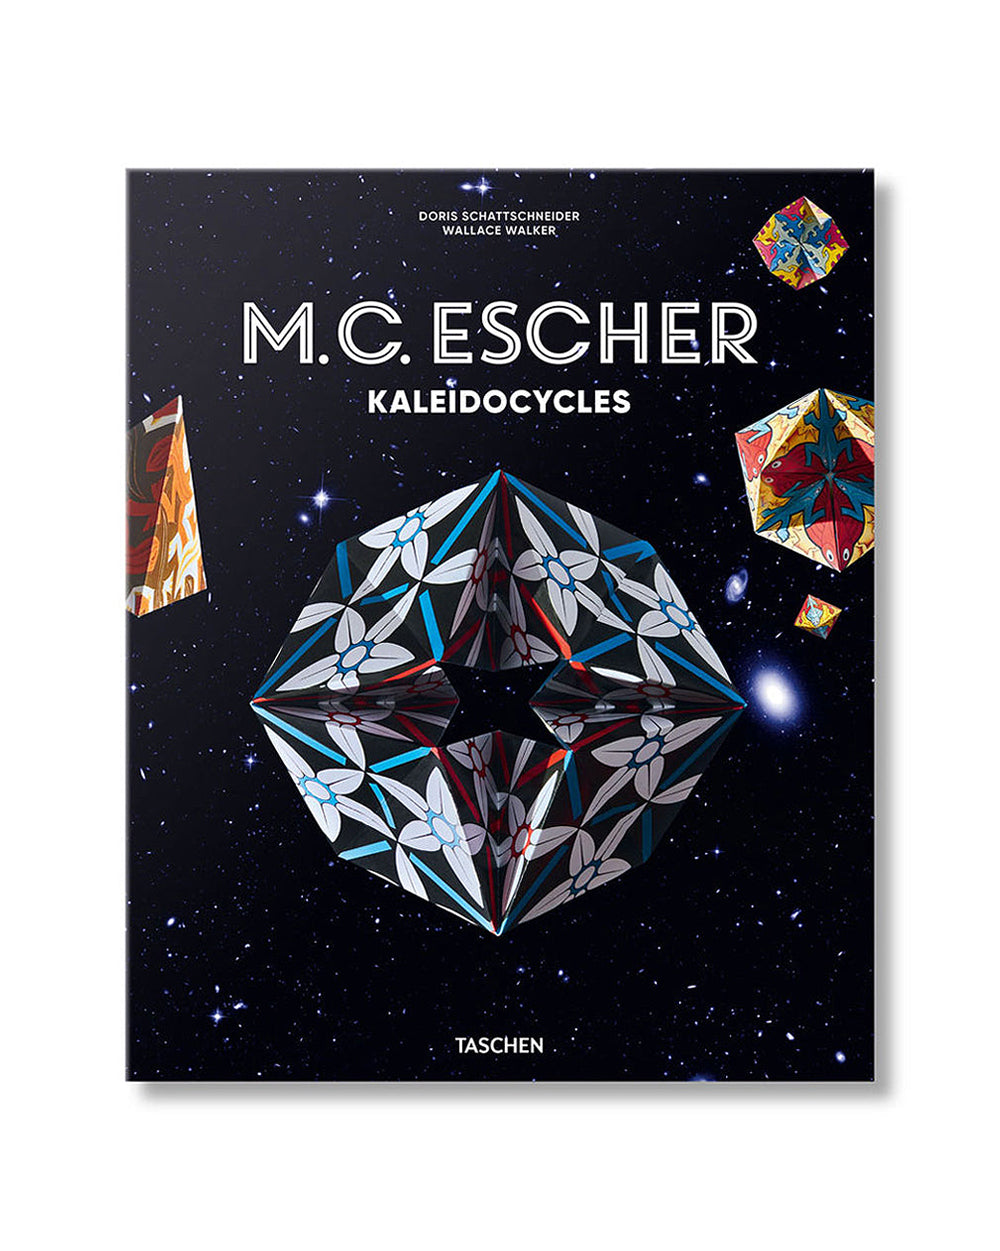 M.C. Escher: Kaleidocycles Book + DIY Kit